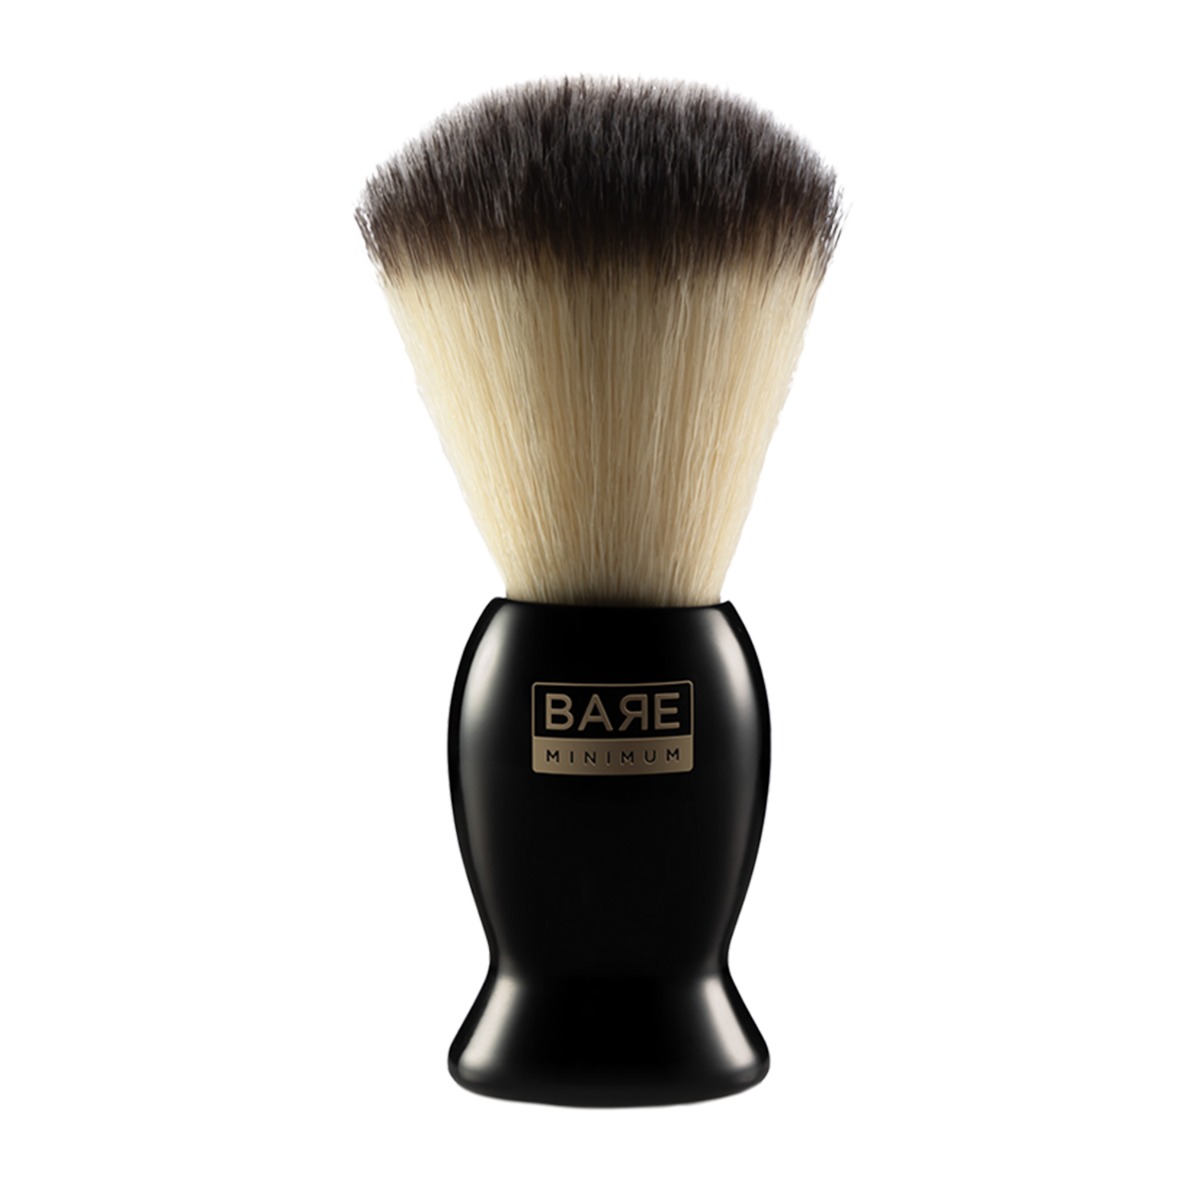 Bare Minimum Soft Shaving Brush 1 pc, Easy-Dry, Long-lasting